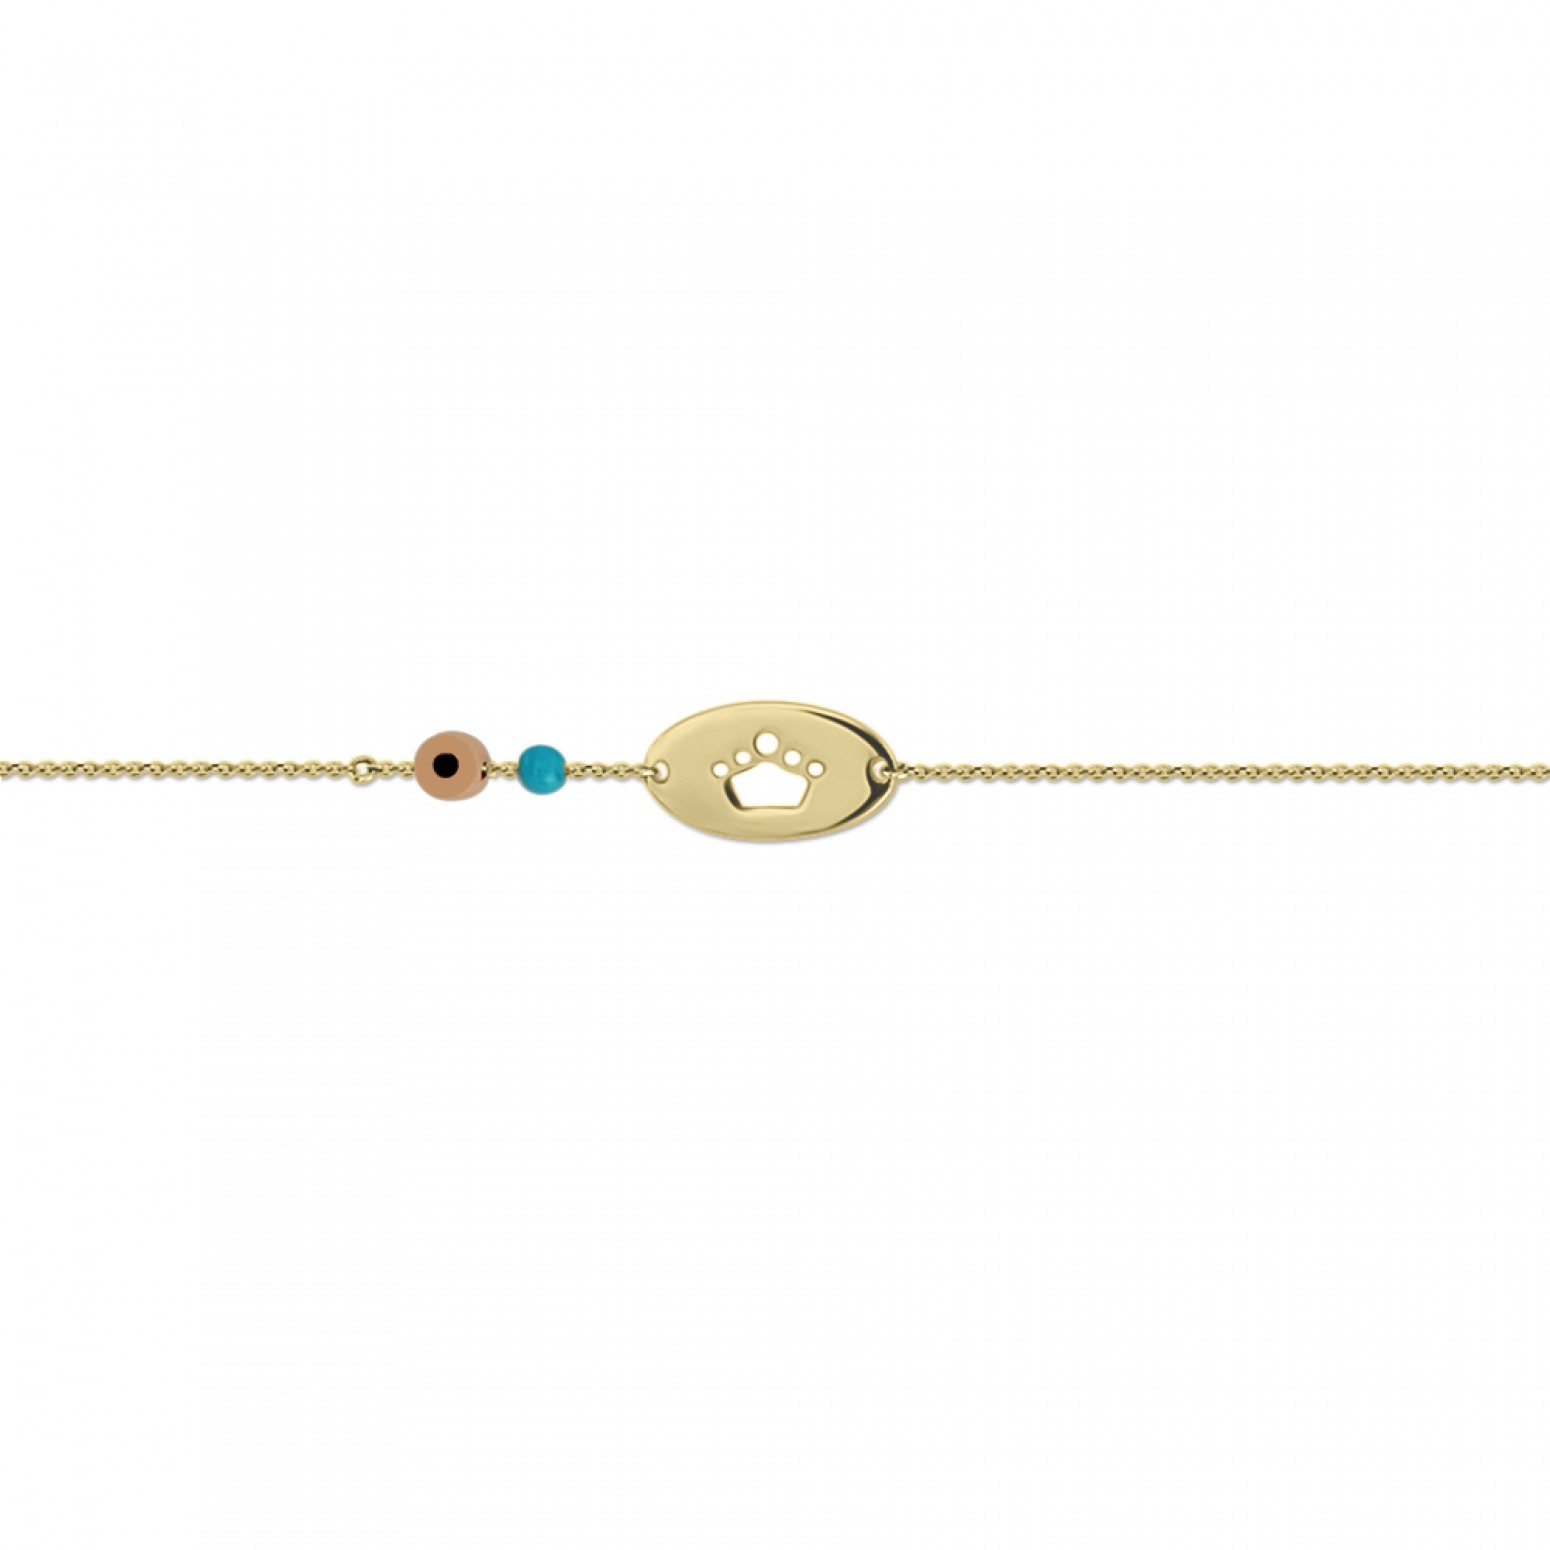 Babies bracelet K14 gold with crown, eye and turquoise pb0379 BRACELETS Κοσμηματα - chrilia.gr